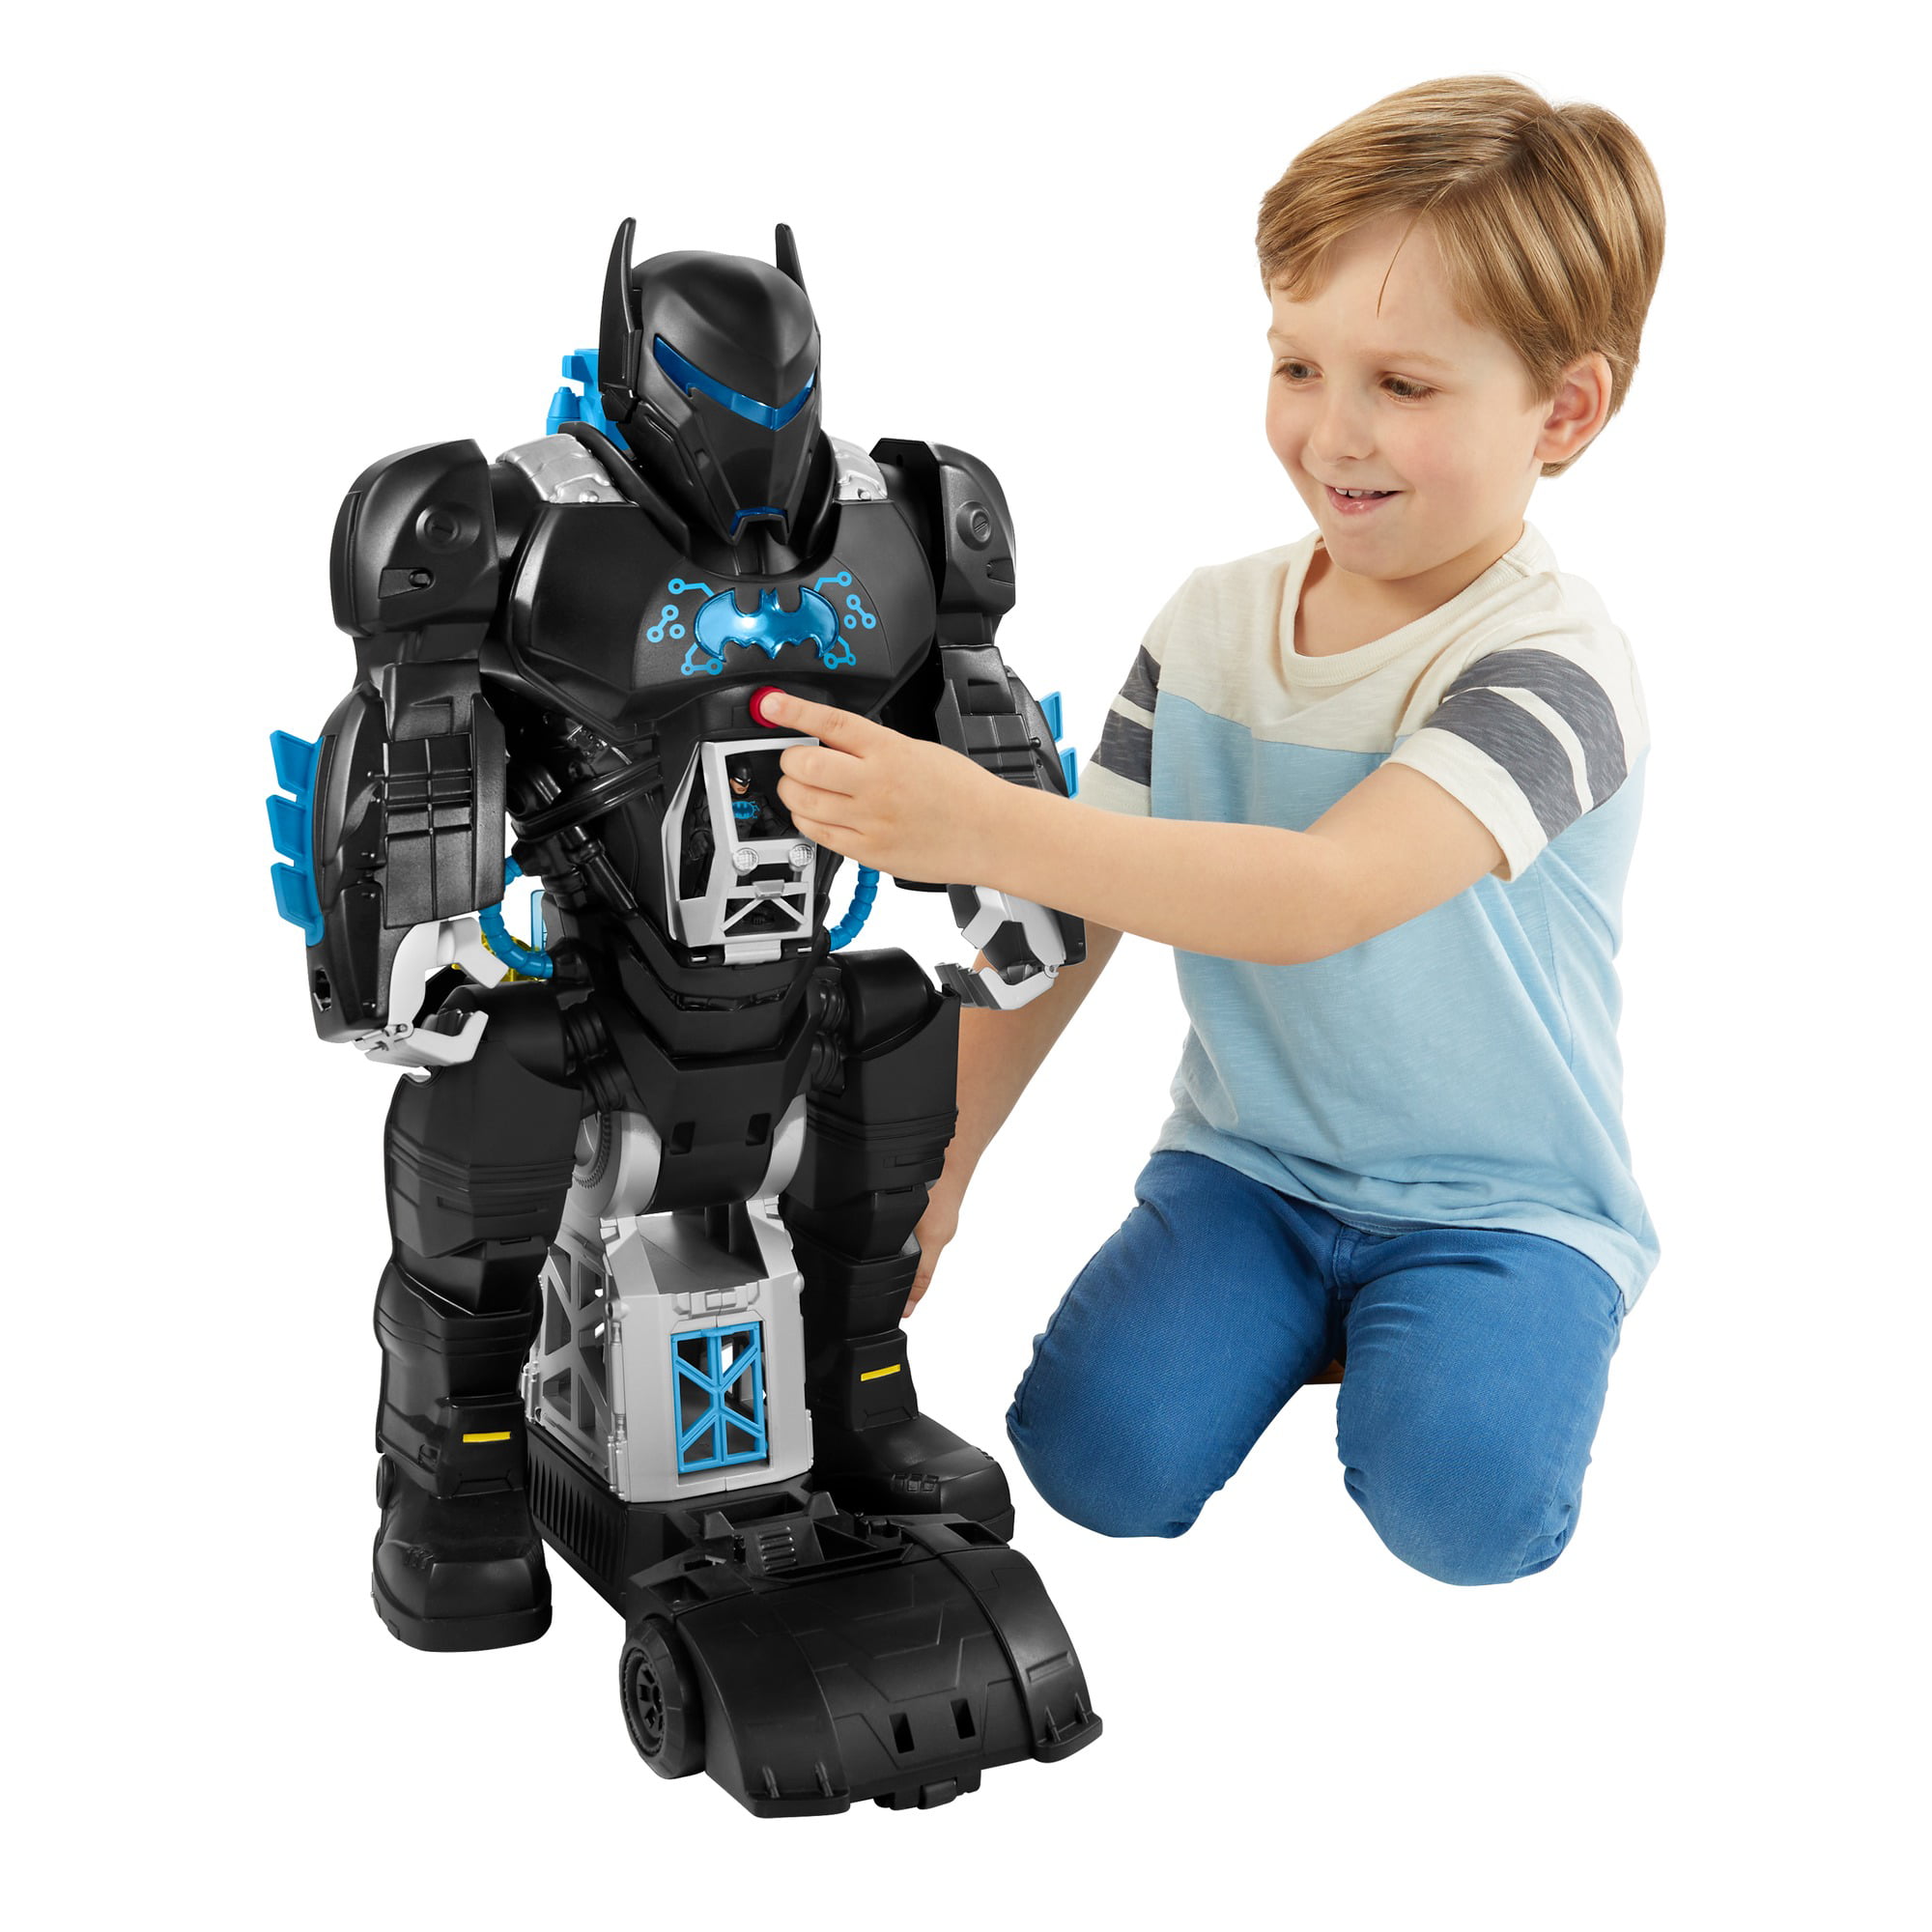 Fisher-Price Imaginext DC Super Friends Bat-Tech Batbot, Batman Playset